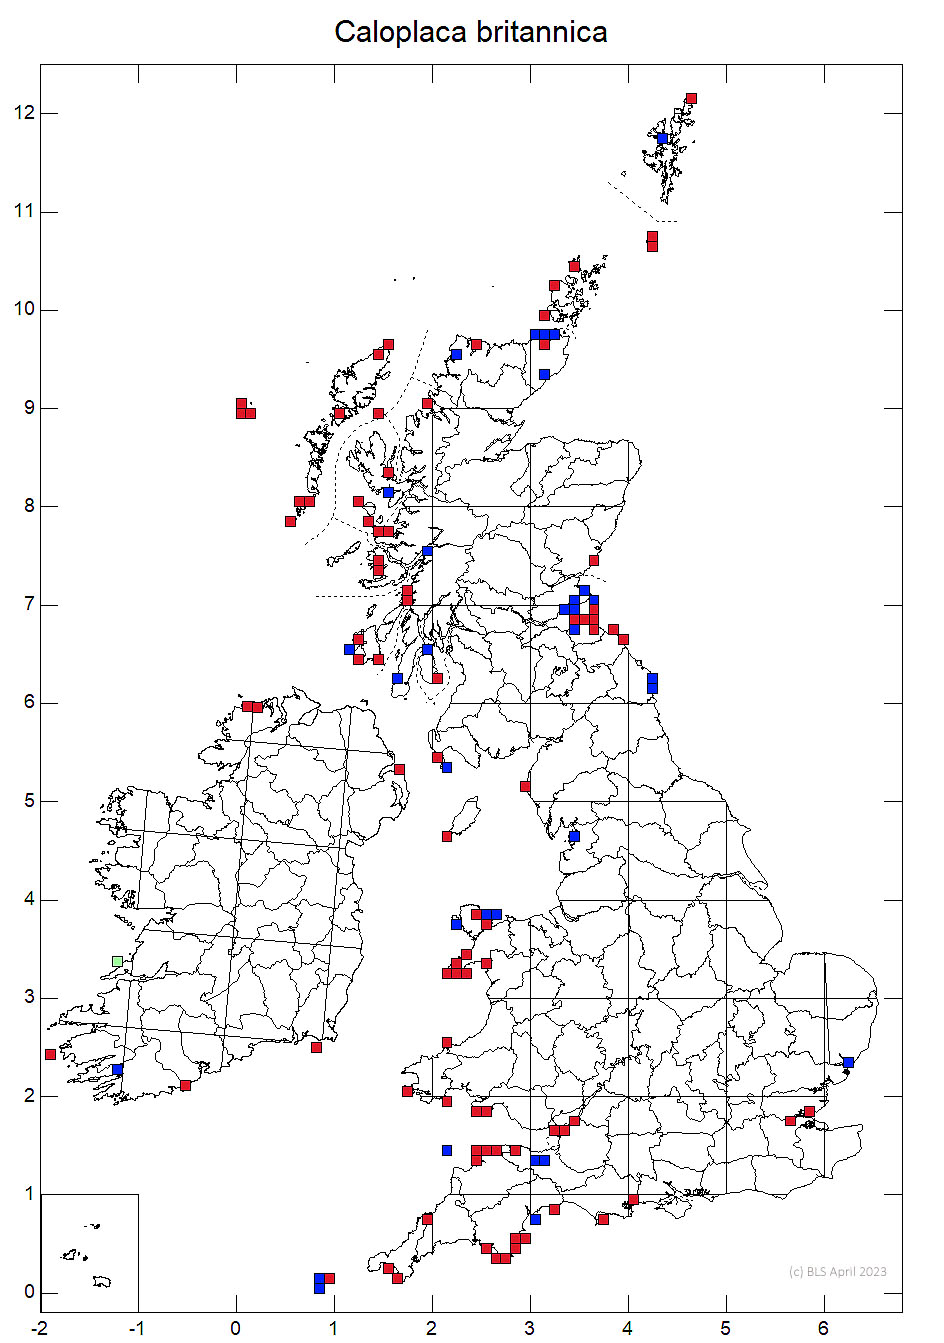 Caloplaca britannica 10km sq distribution map